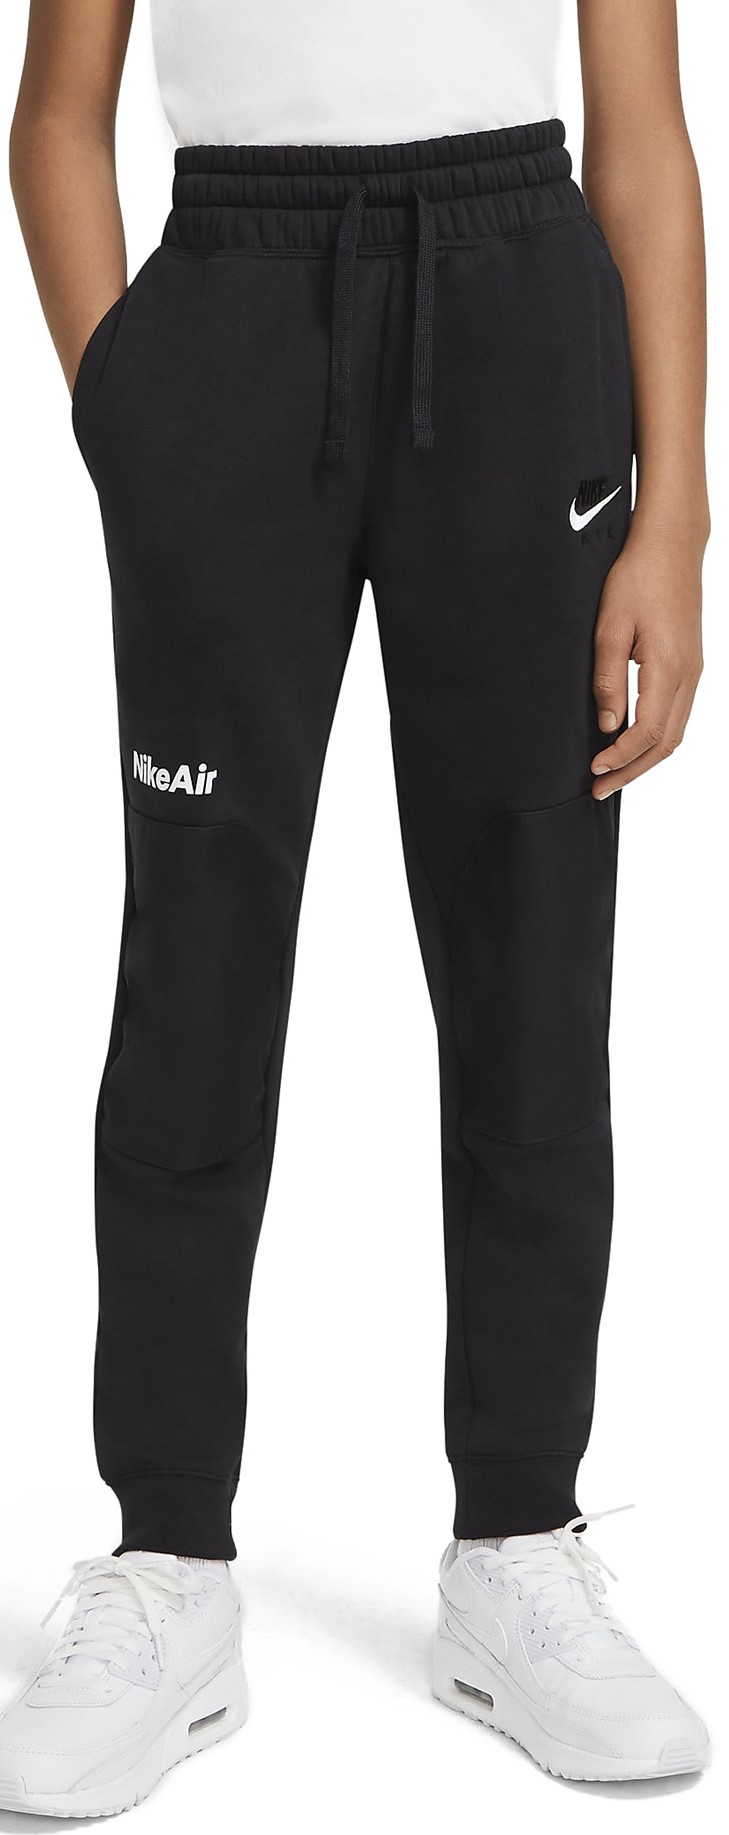 Панталони Nike JR NSW Air spodnie